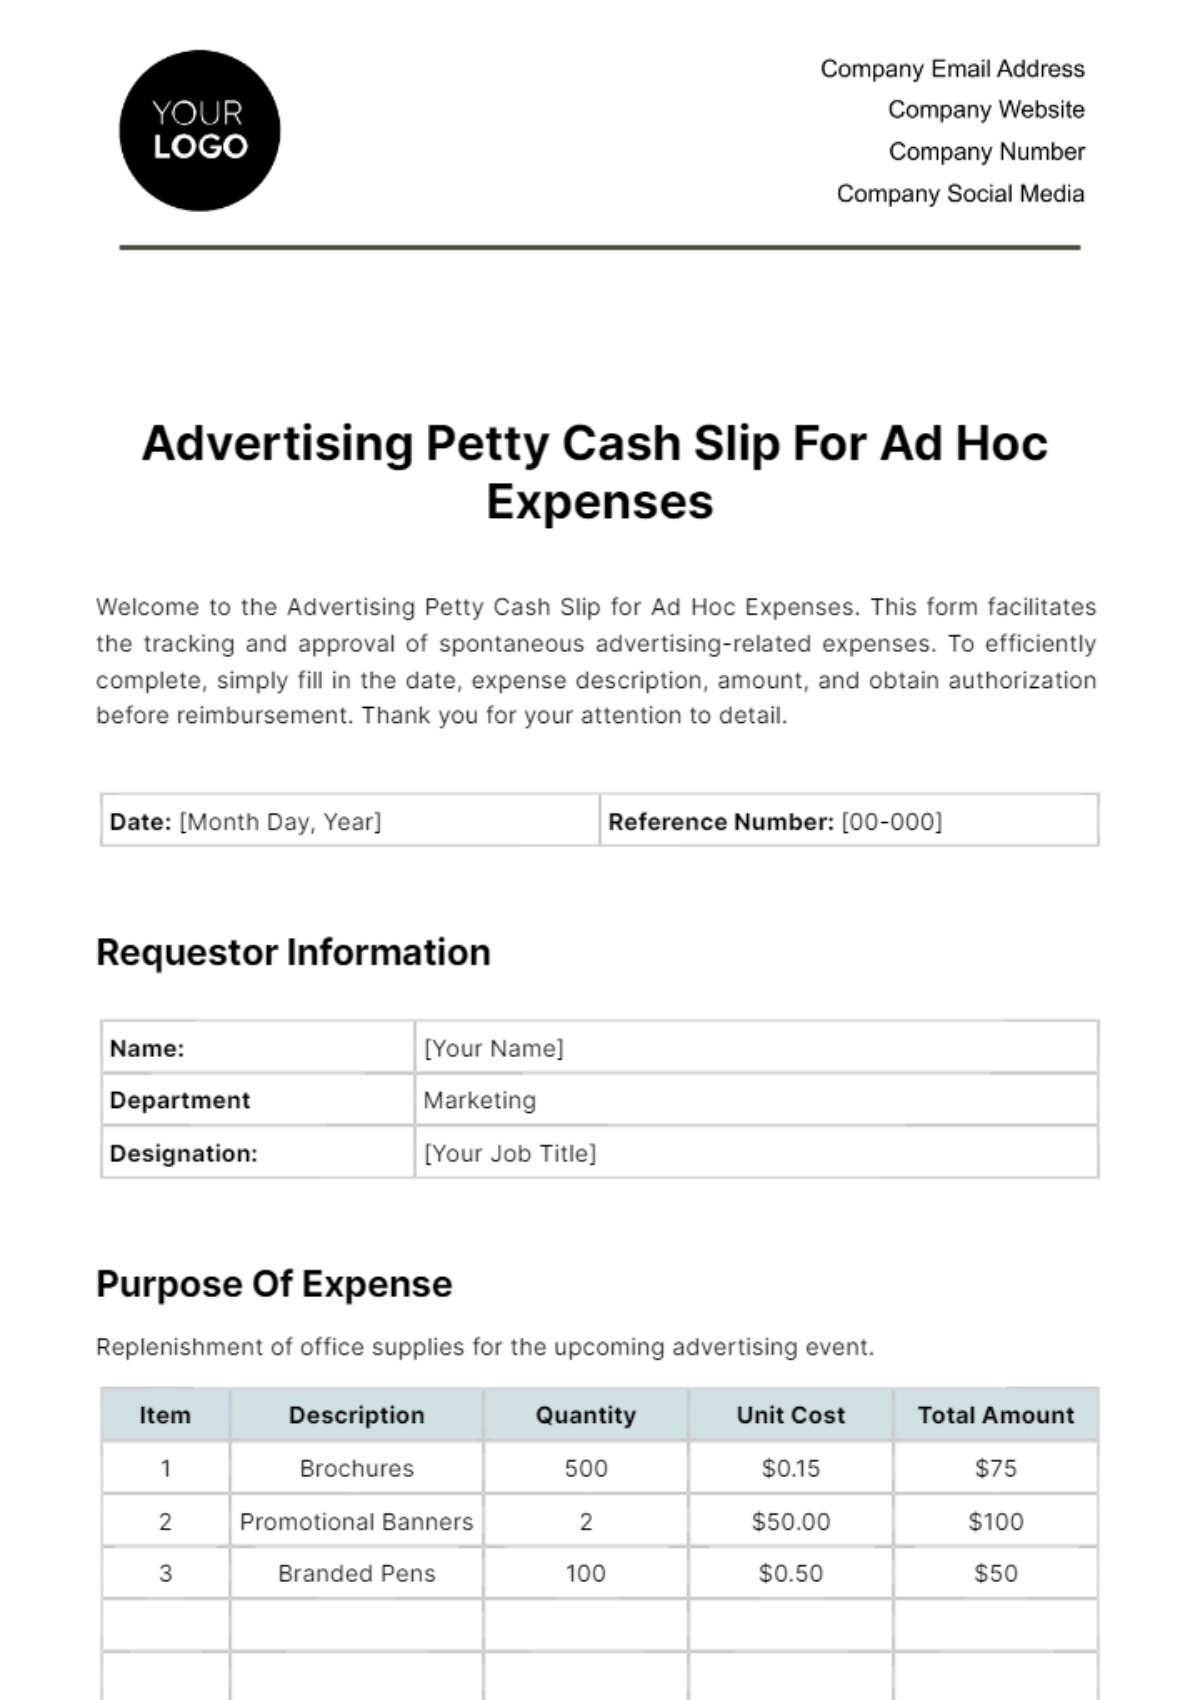 Advertising Petty Cash Slip for Ad Hoc Expenses Template